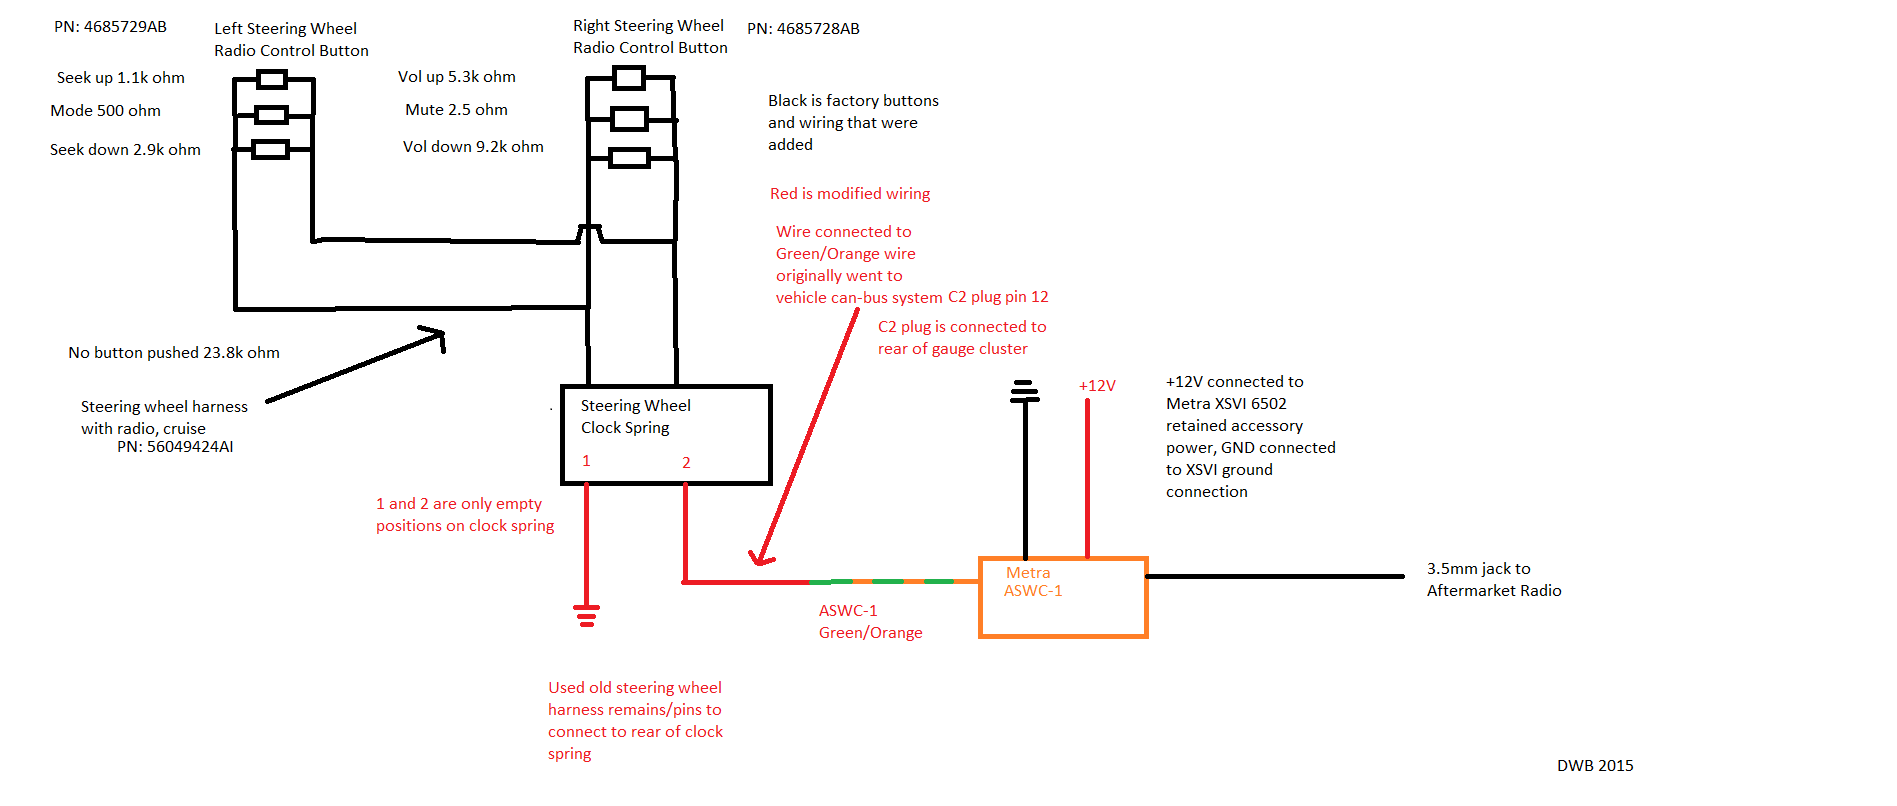 Radio Control Wiring Diagram - Wiring Diagram